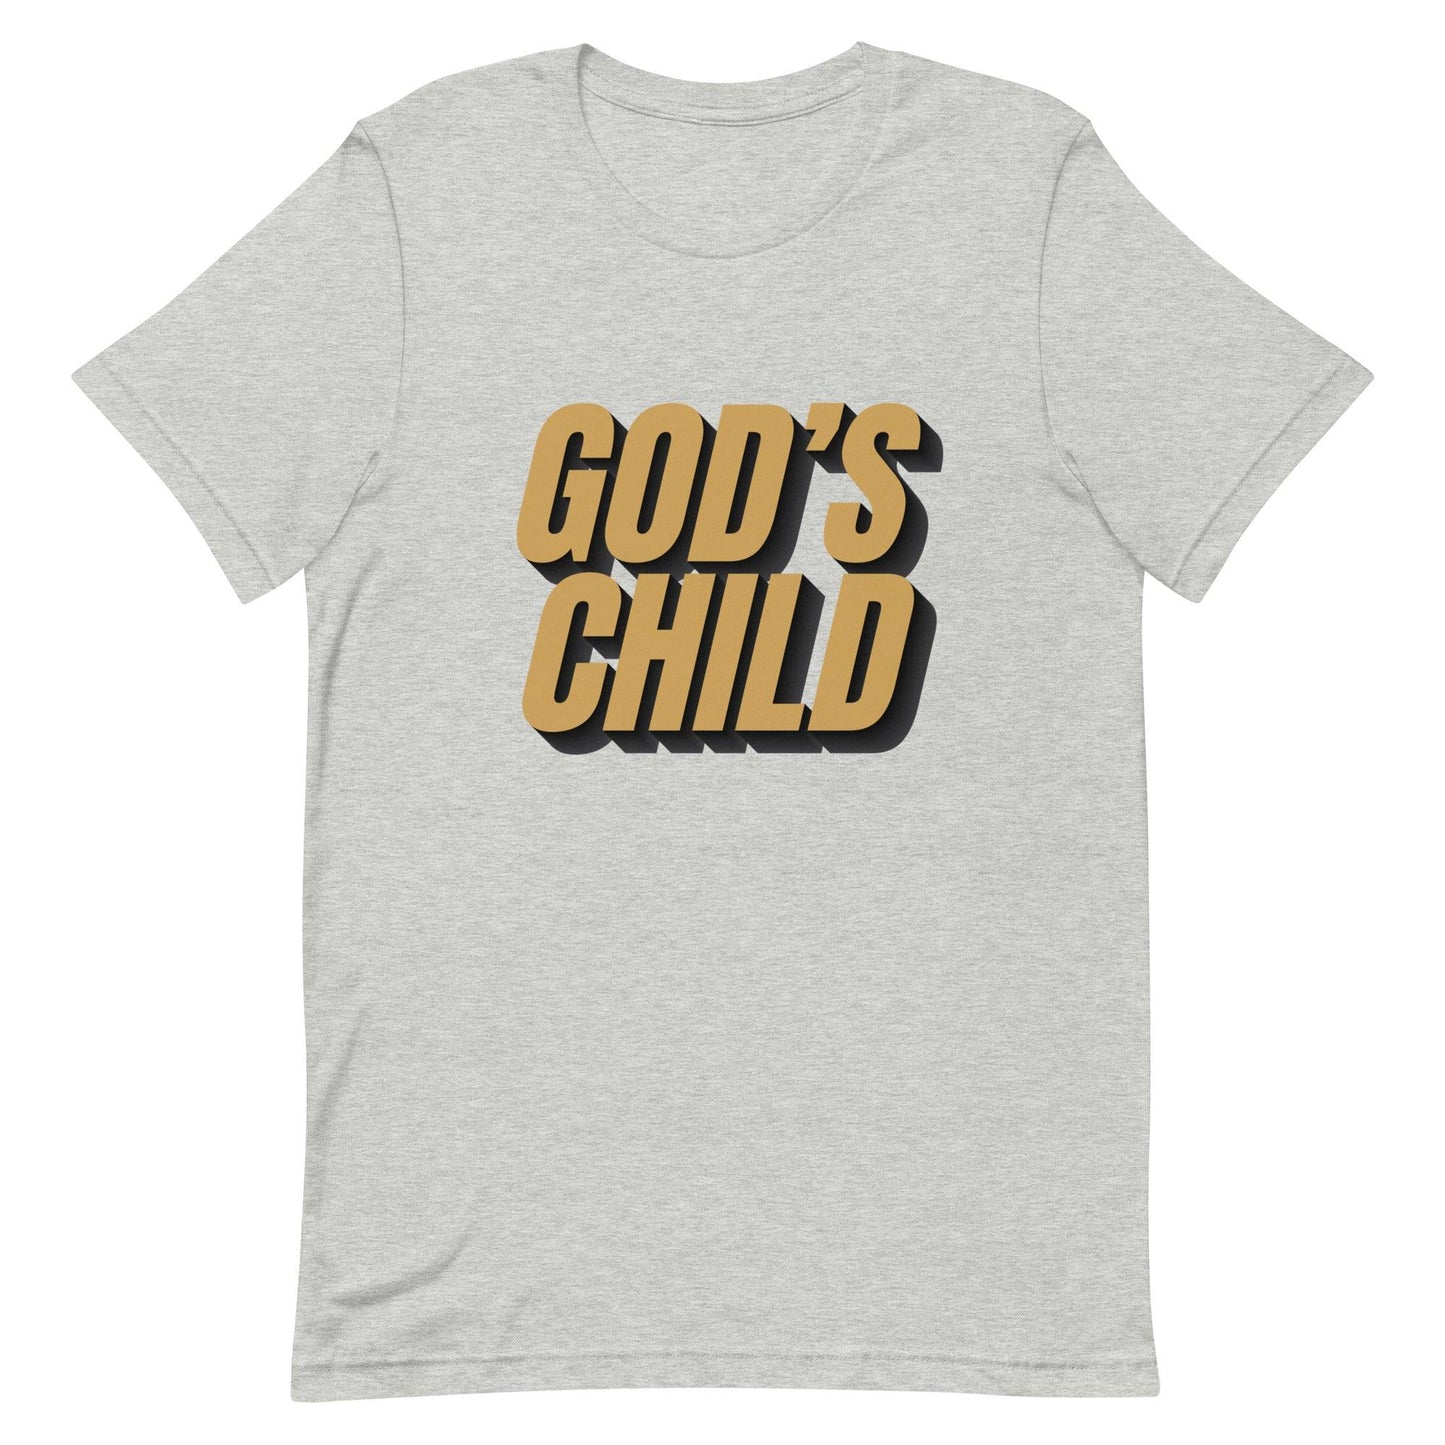 Davonte Brown "God's Child" t-shirt - Fan Arch